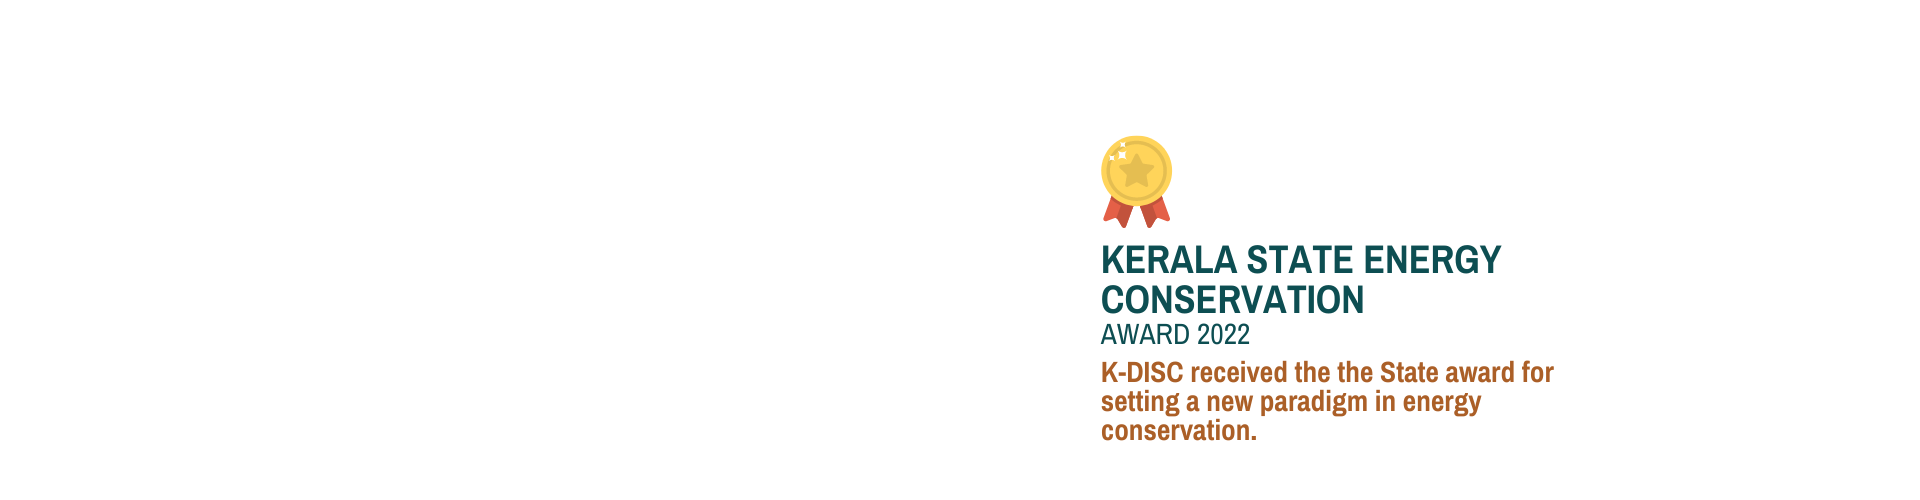 kerala state Energy conservation award 2022